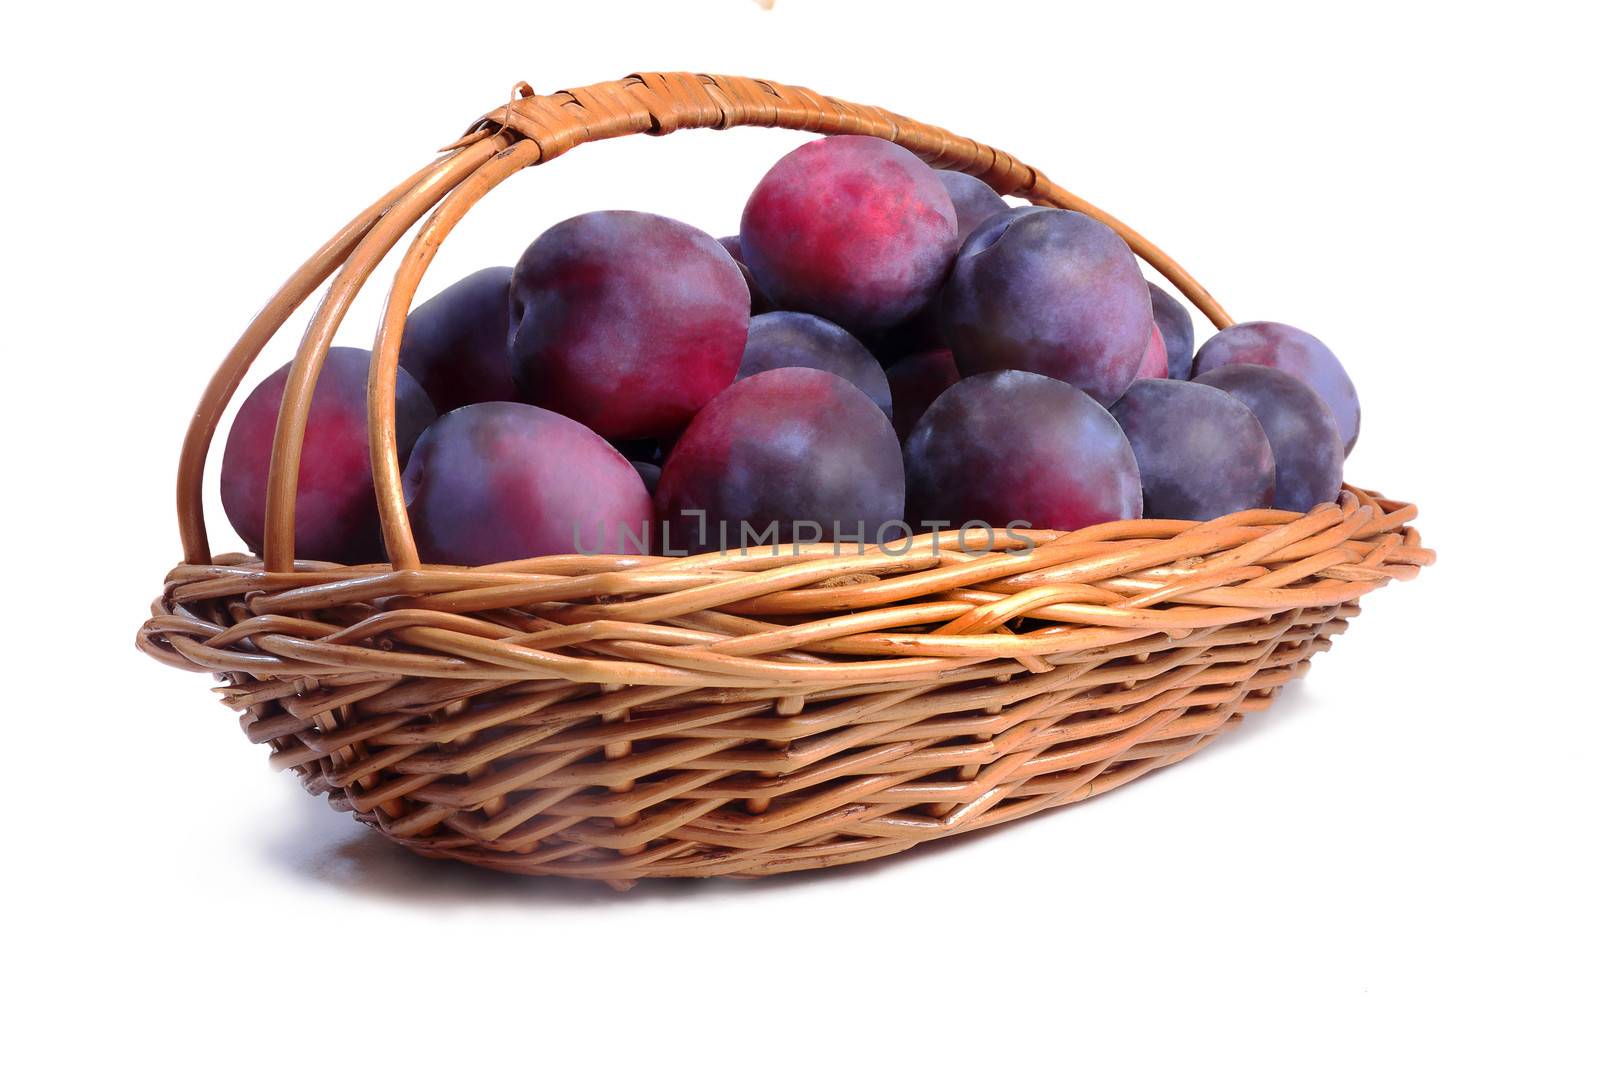 Basket full of ripe plums by georgina198